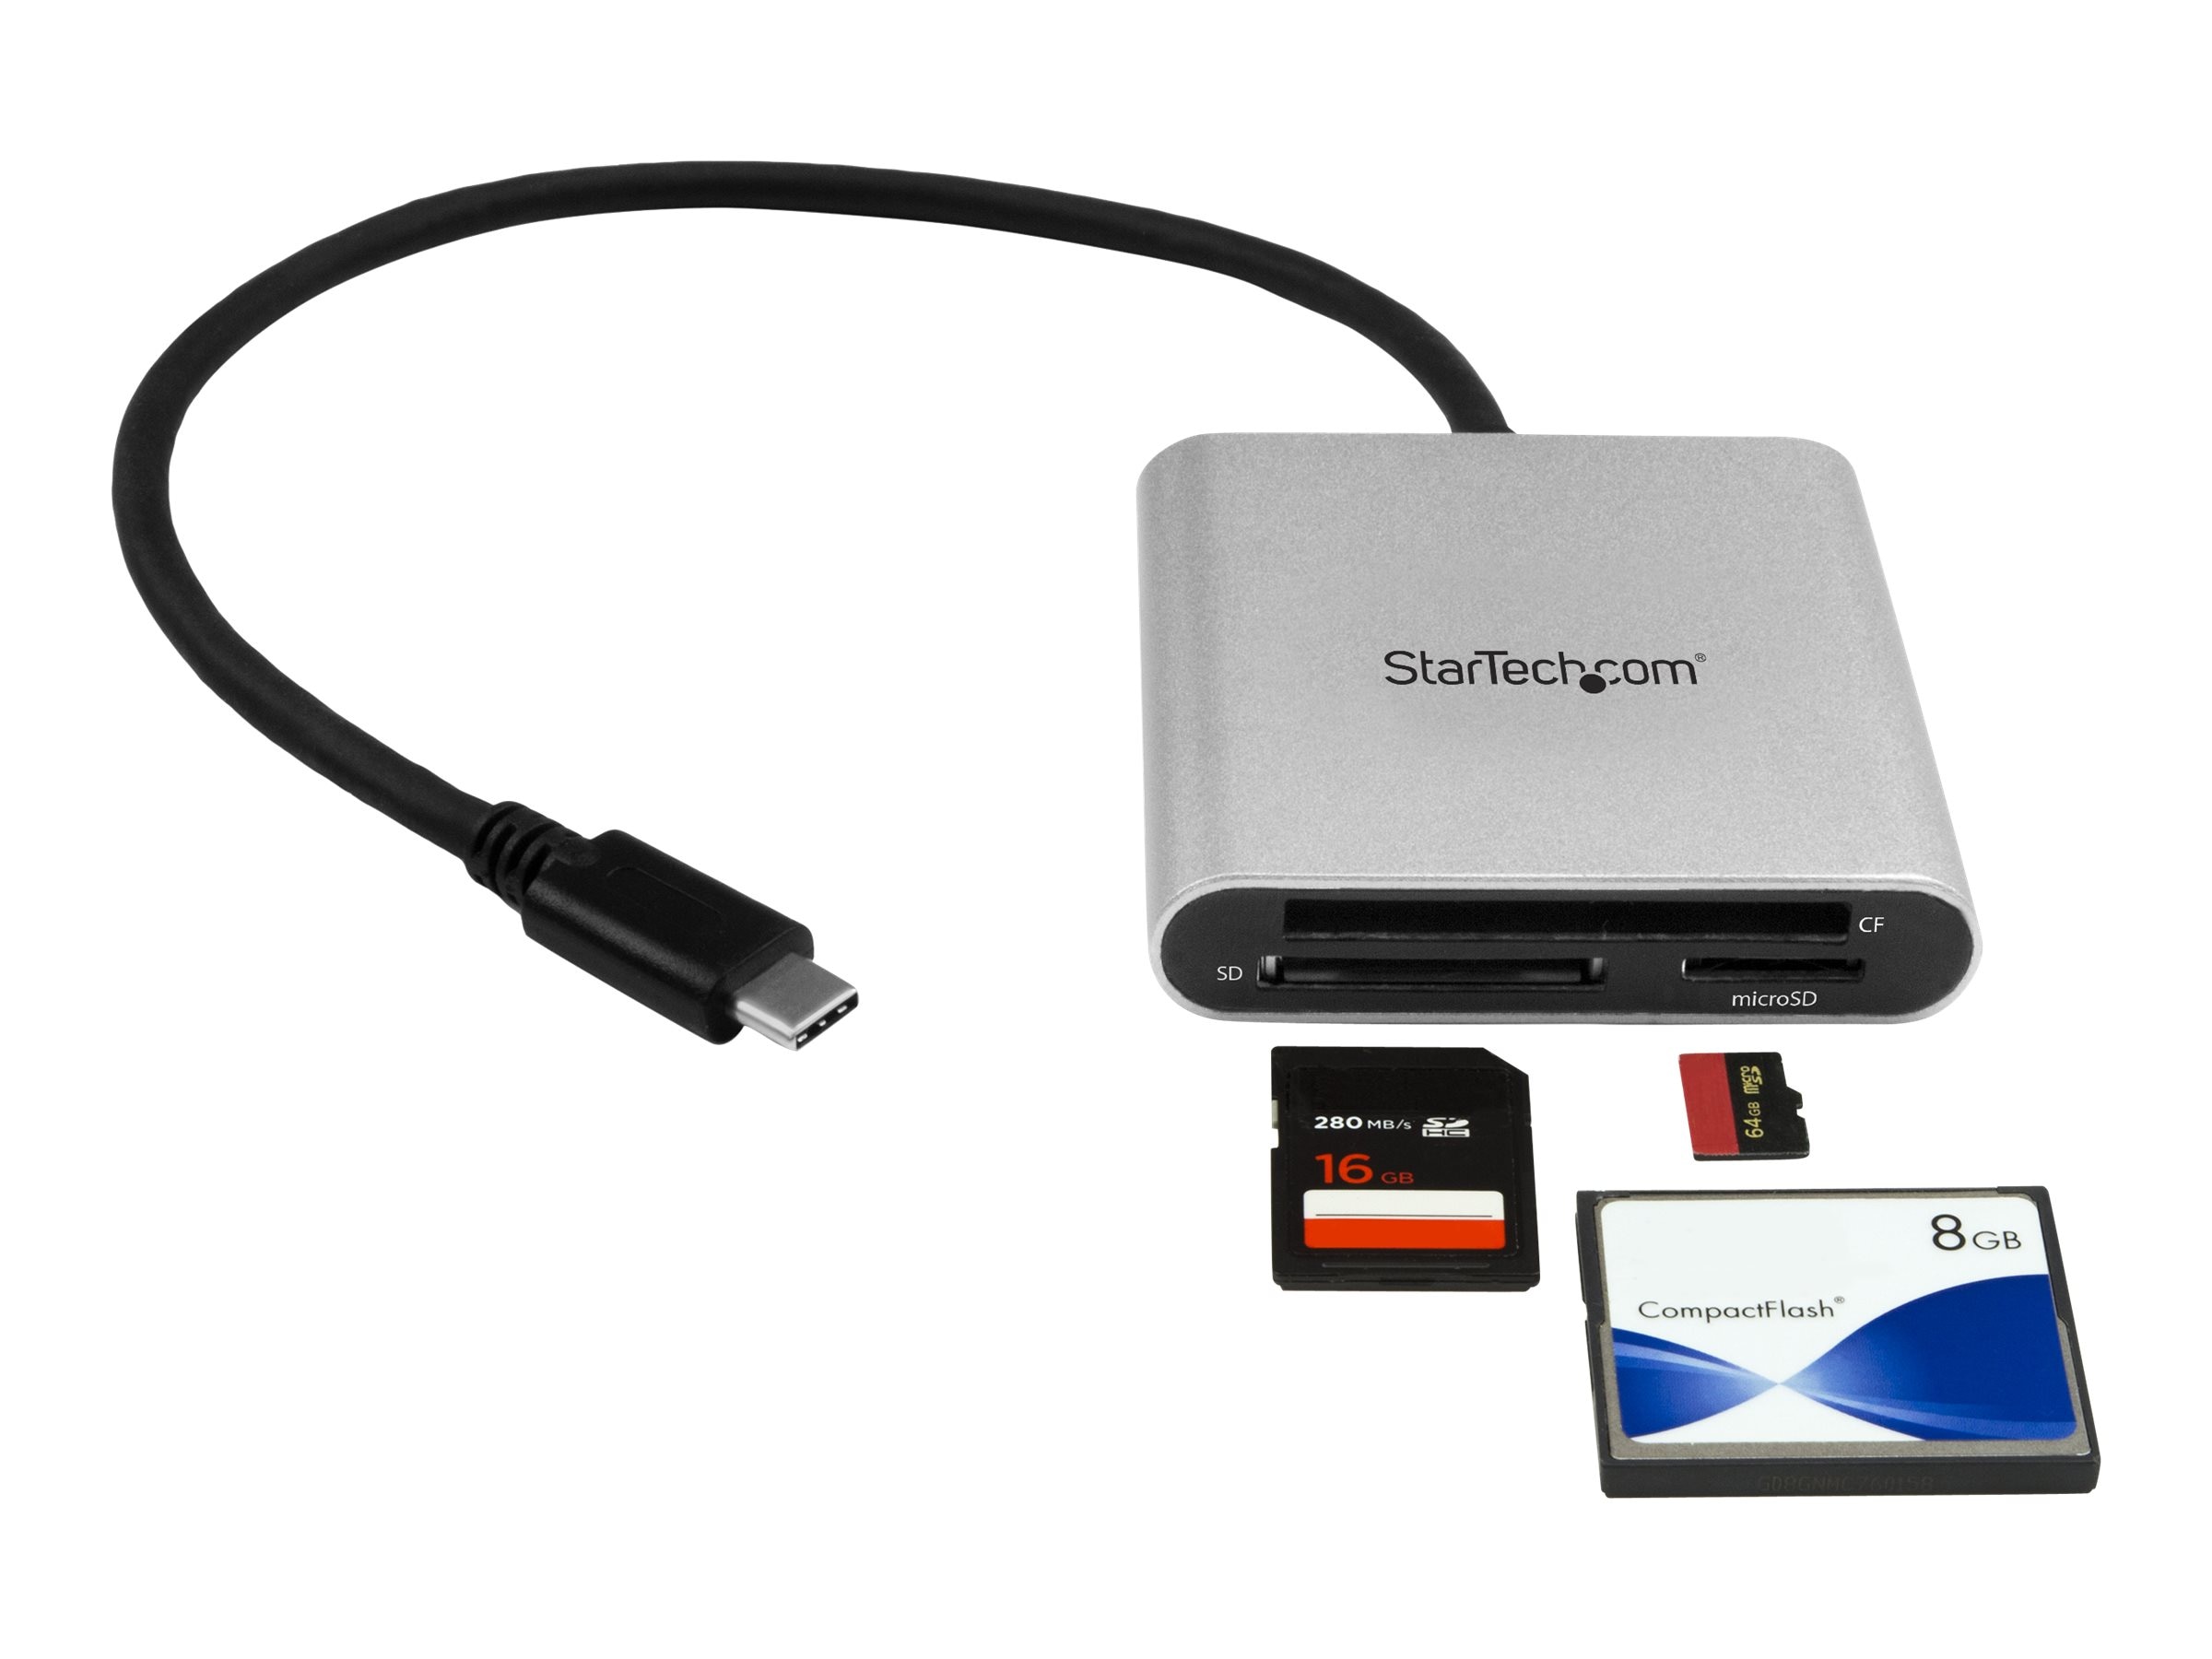 StarTech.com USB 3.0 Flash Memory Multi-Card Reader and Writer